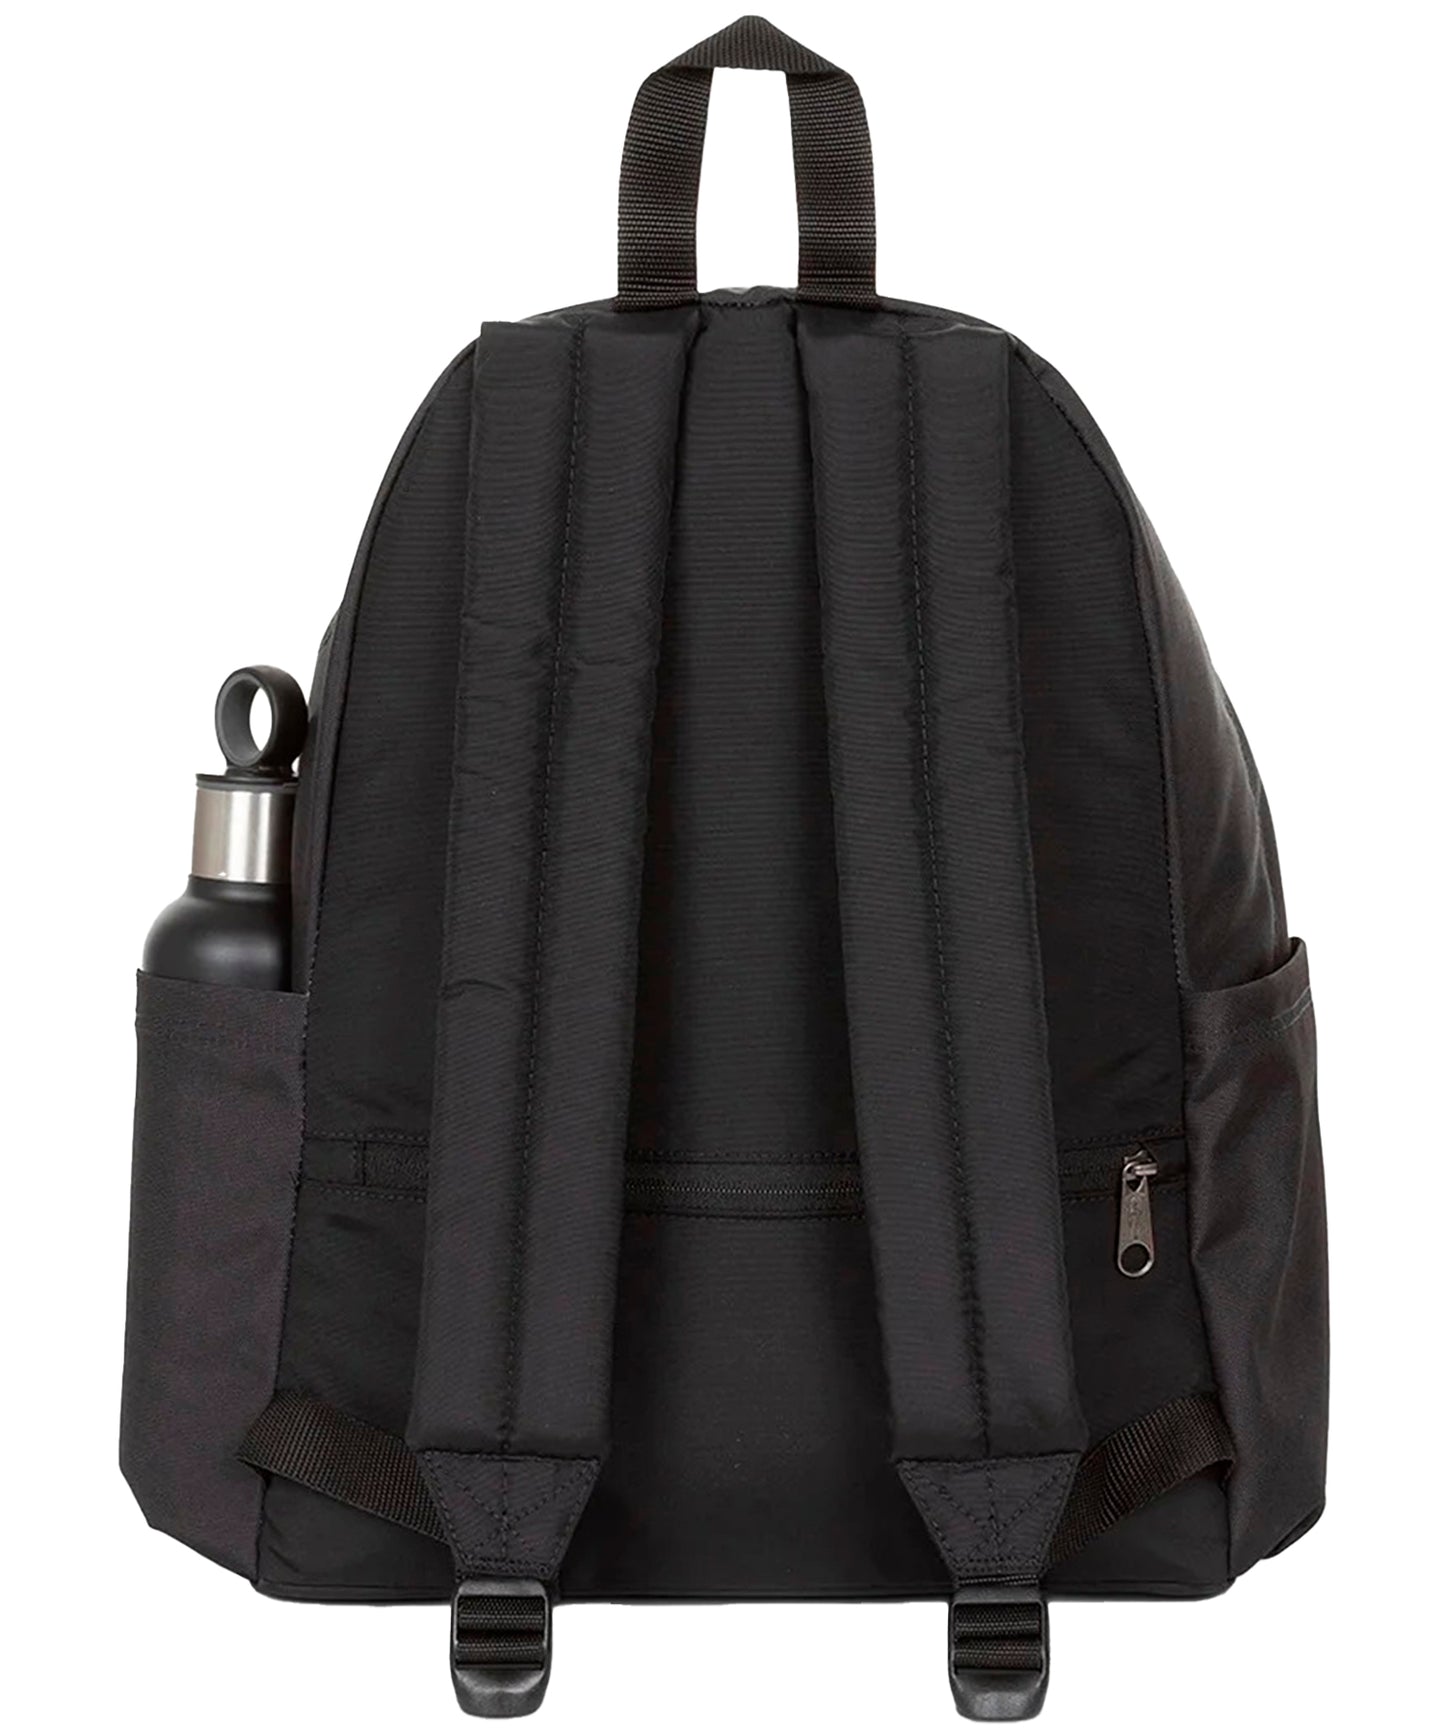 La mochila eastpak-rick-and-morty-3k5-ram-4-de-color-negro-varios-bolsillos-y-divertidas-ilustraciones-de-rick-and-morty